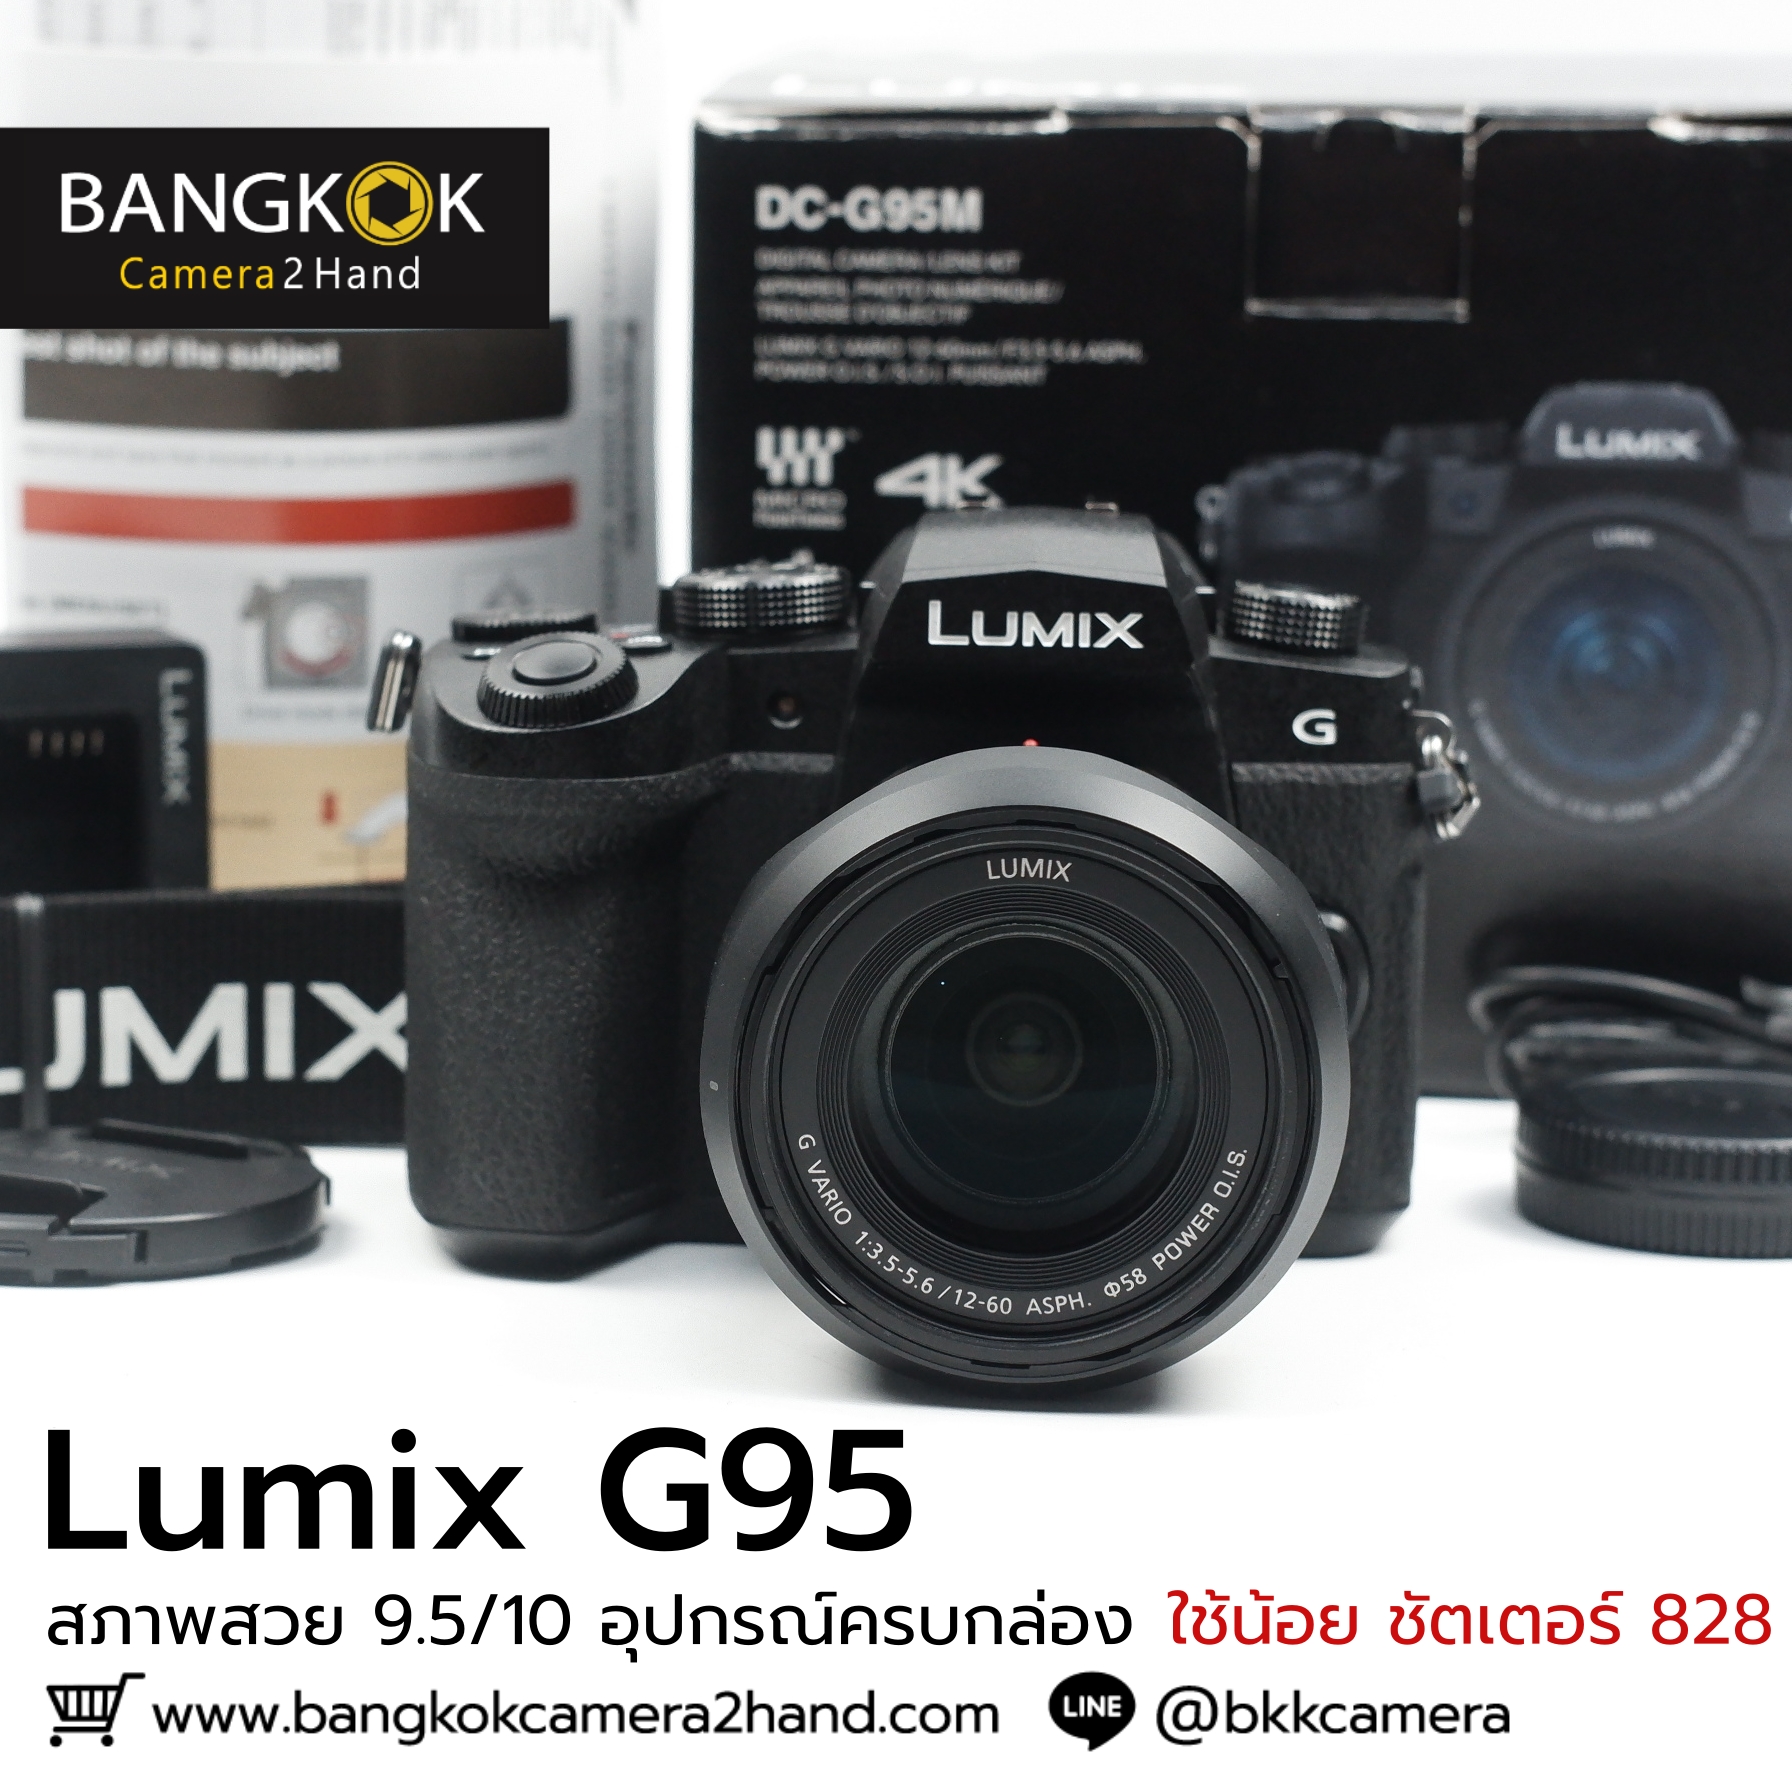 Lumix G95 ชัตเตอร์เพียง 828